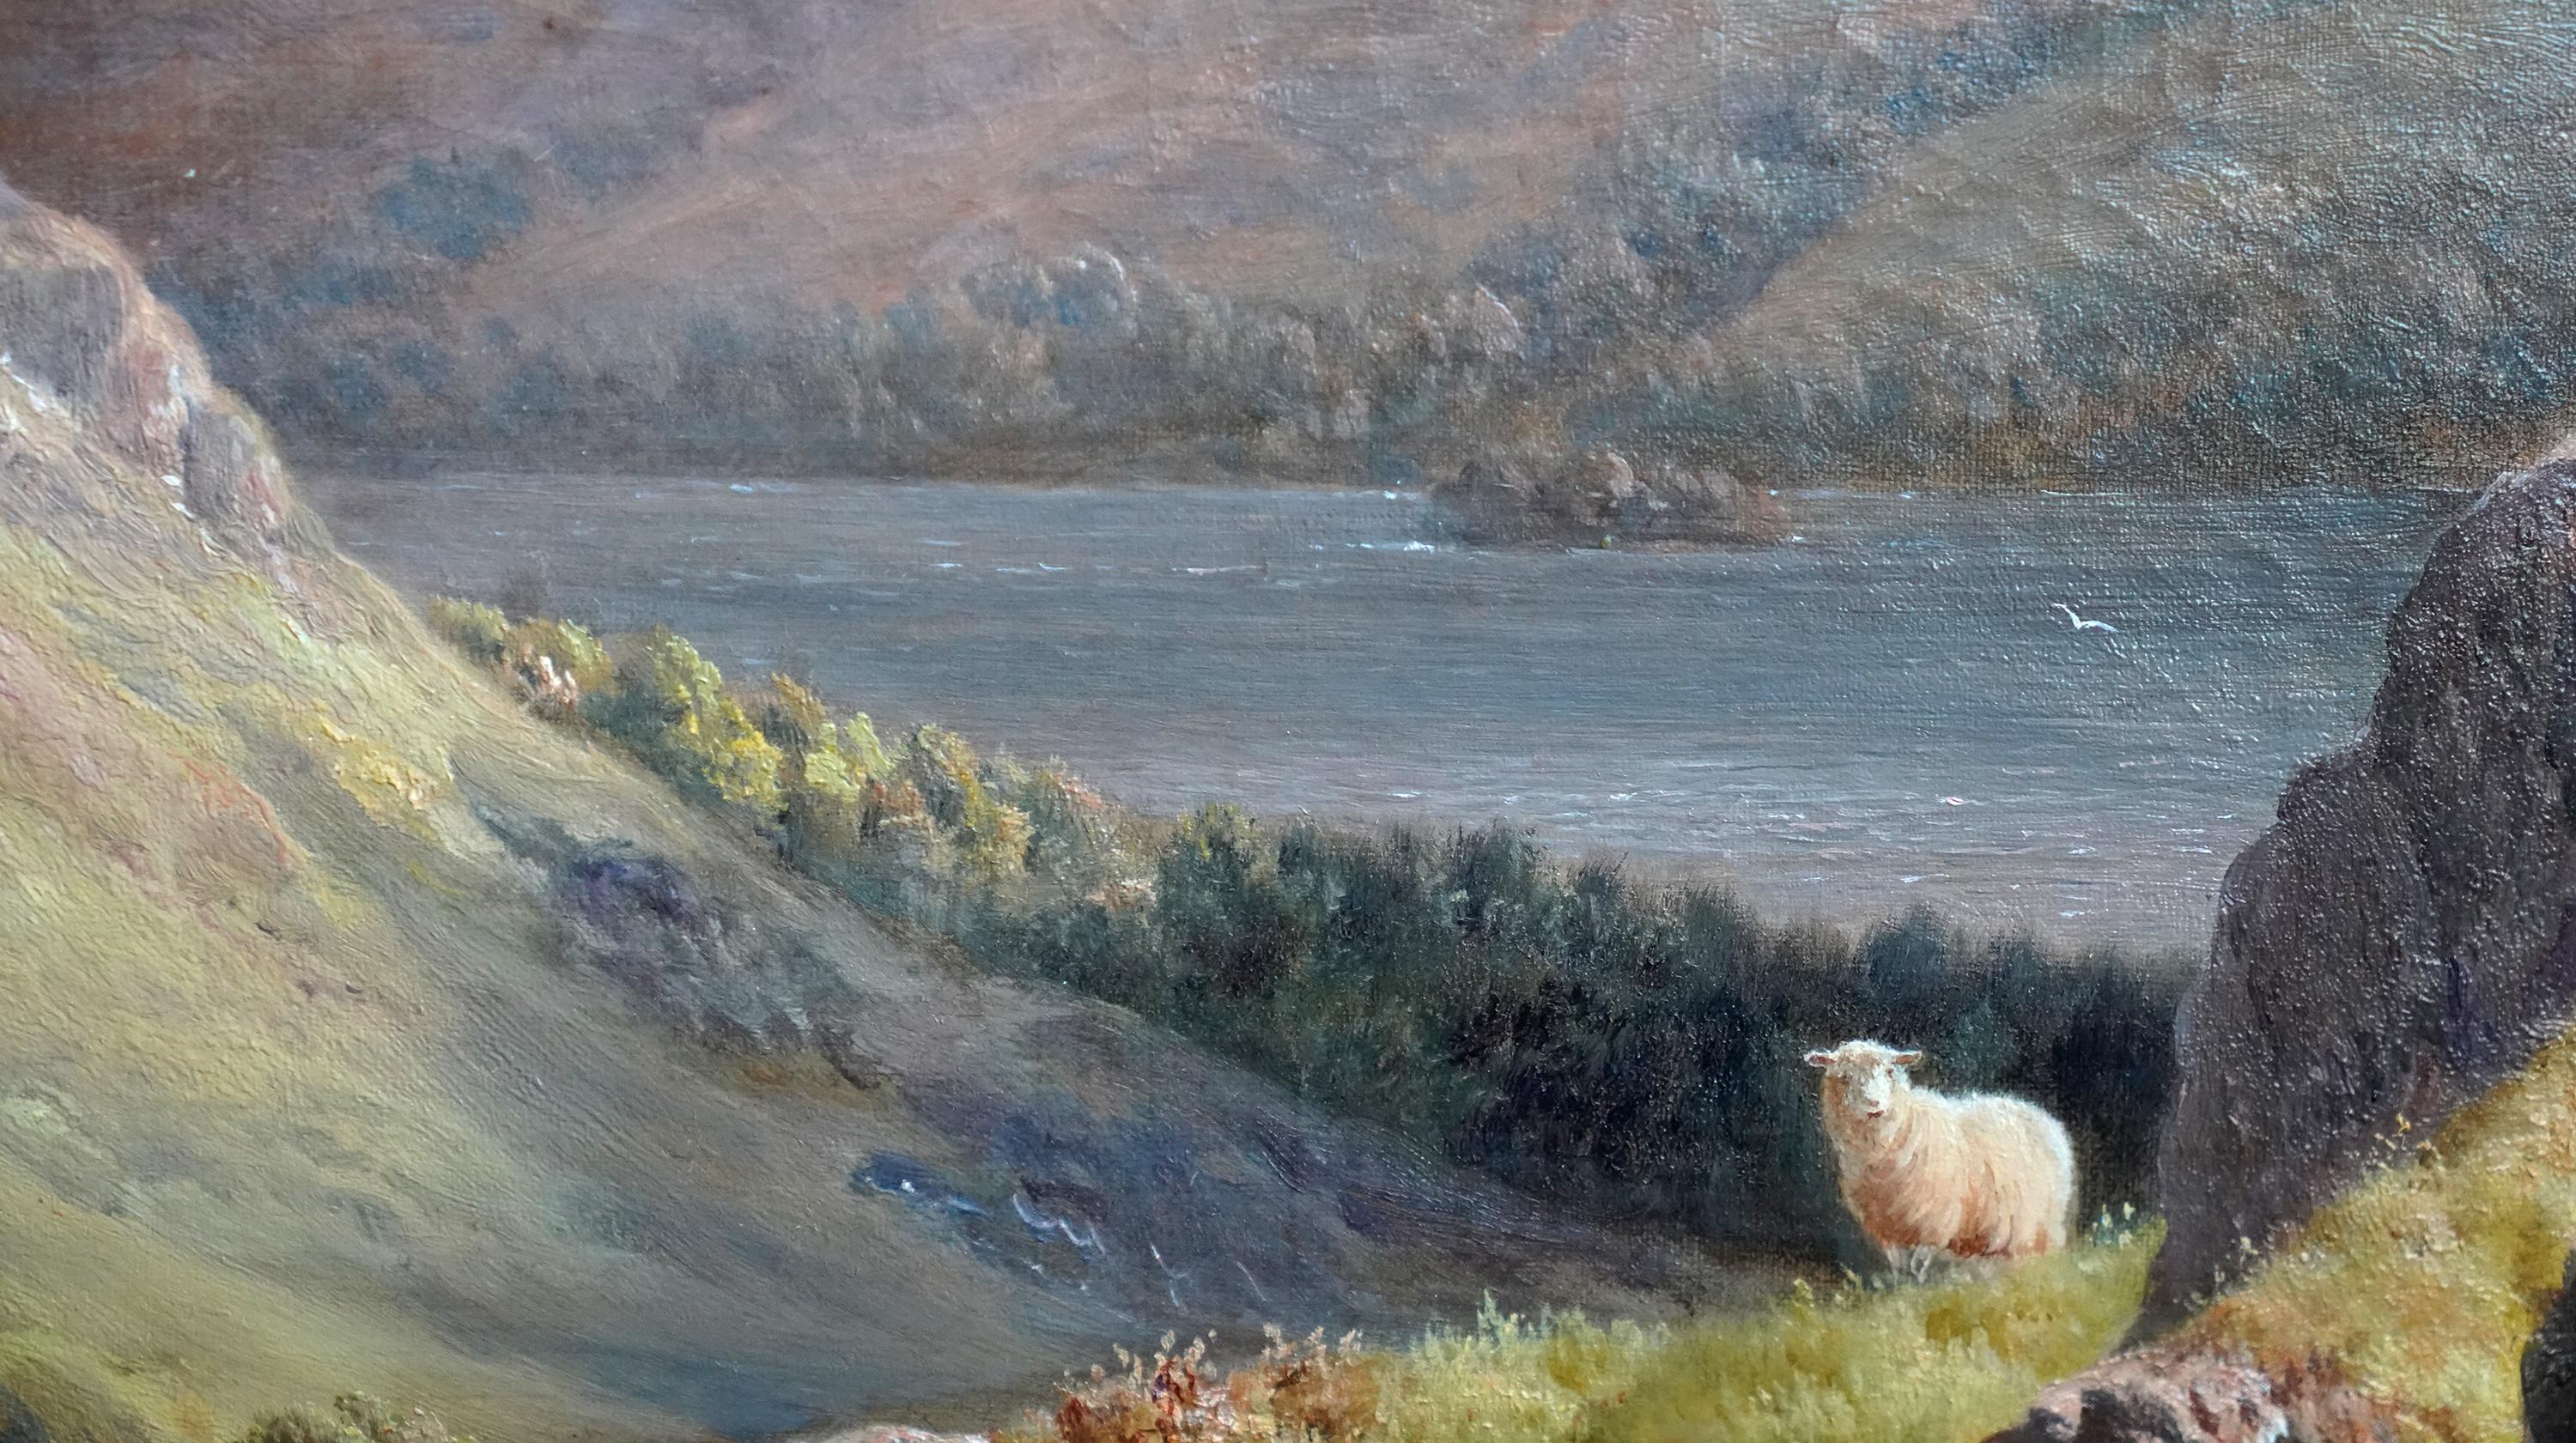 Derwent Water Lake District Landscape - British Victorian art oil painting For Sale 2